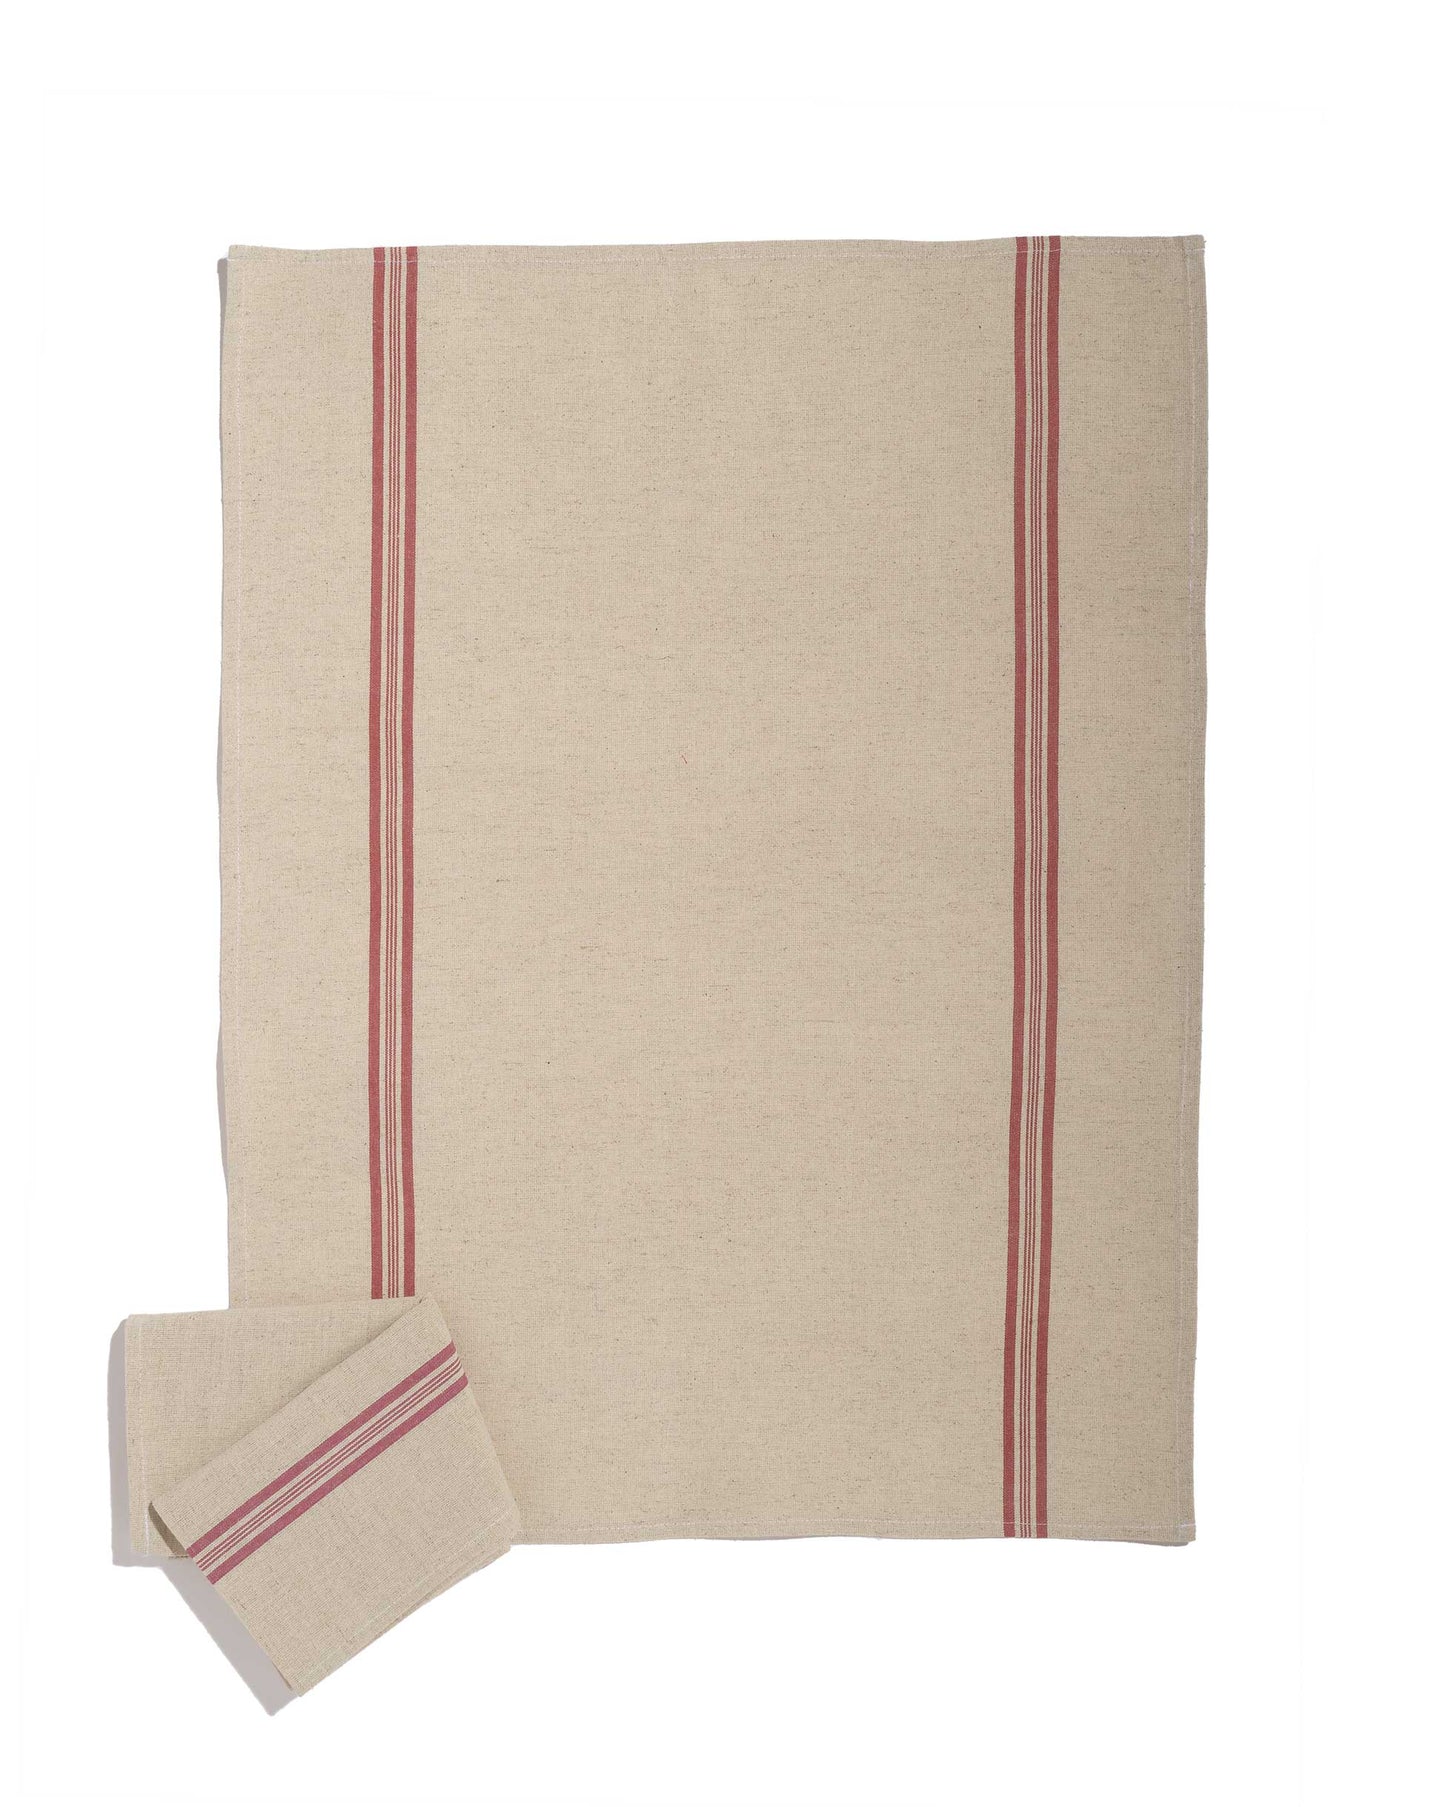 Mixed linen/cotton tea towel